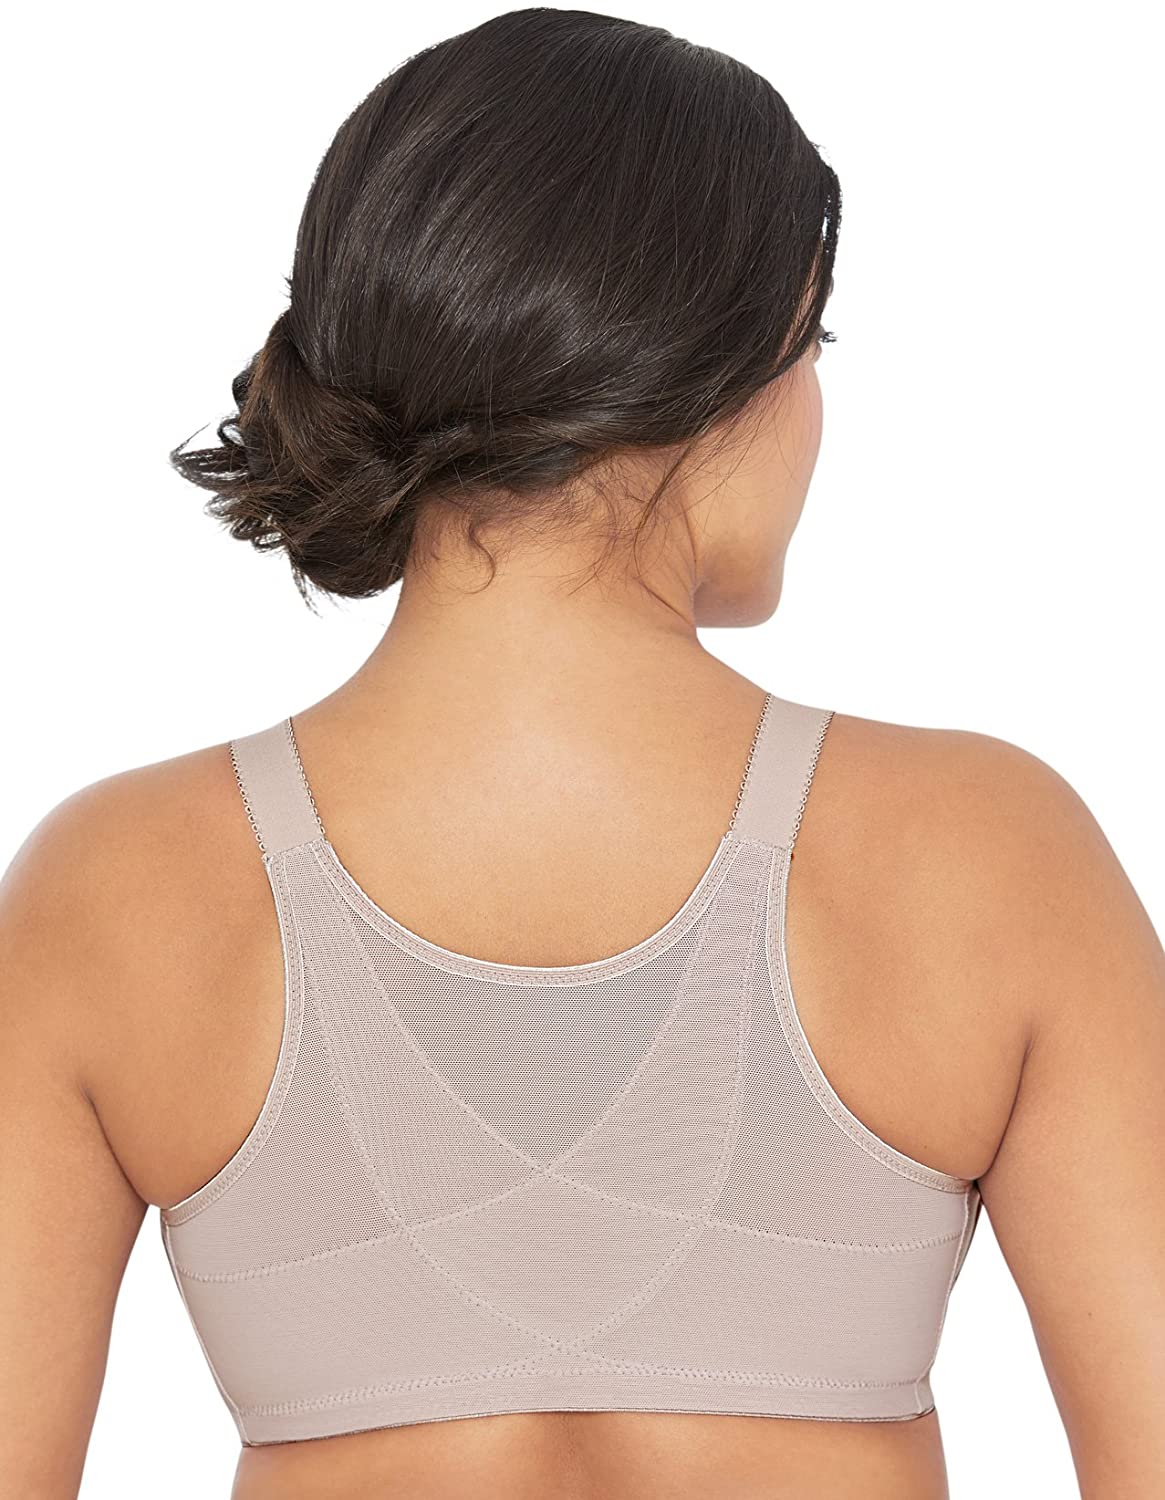 Glamorise Women's ComfortLift Front Close Lace Posture Back Support Bra